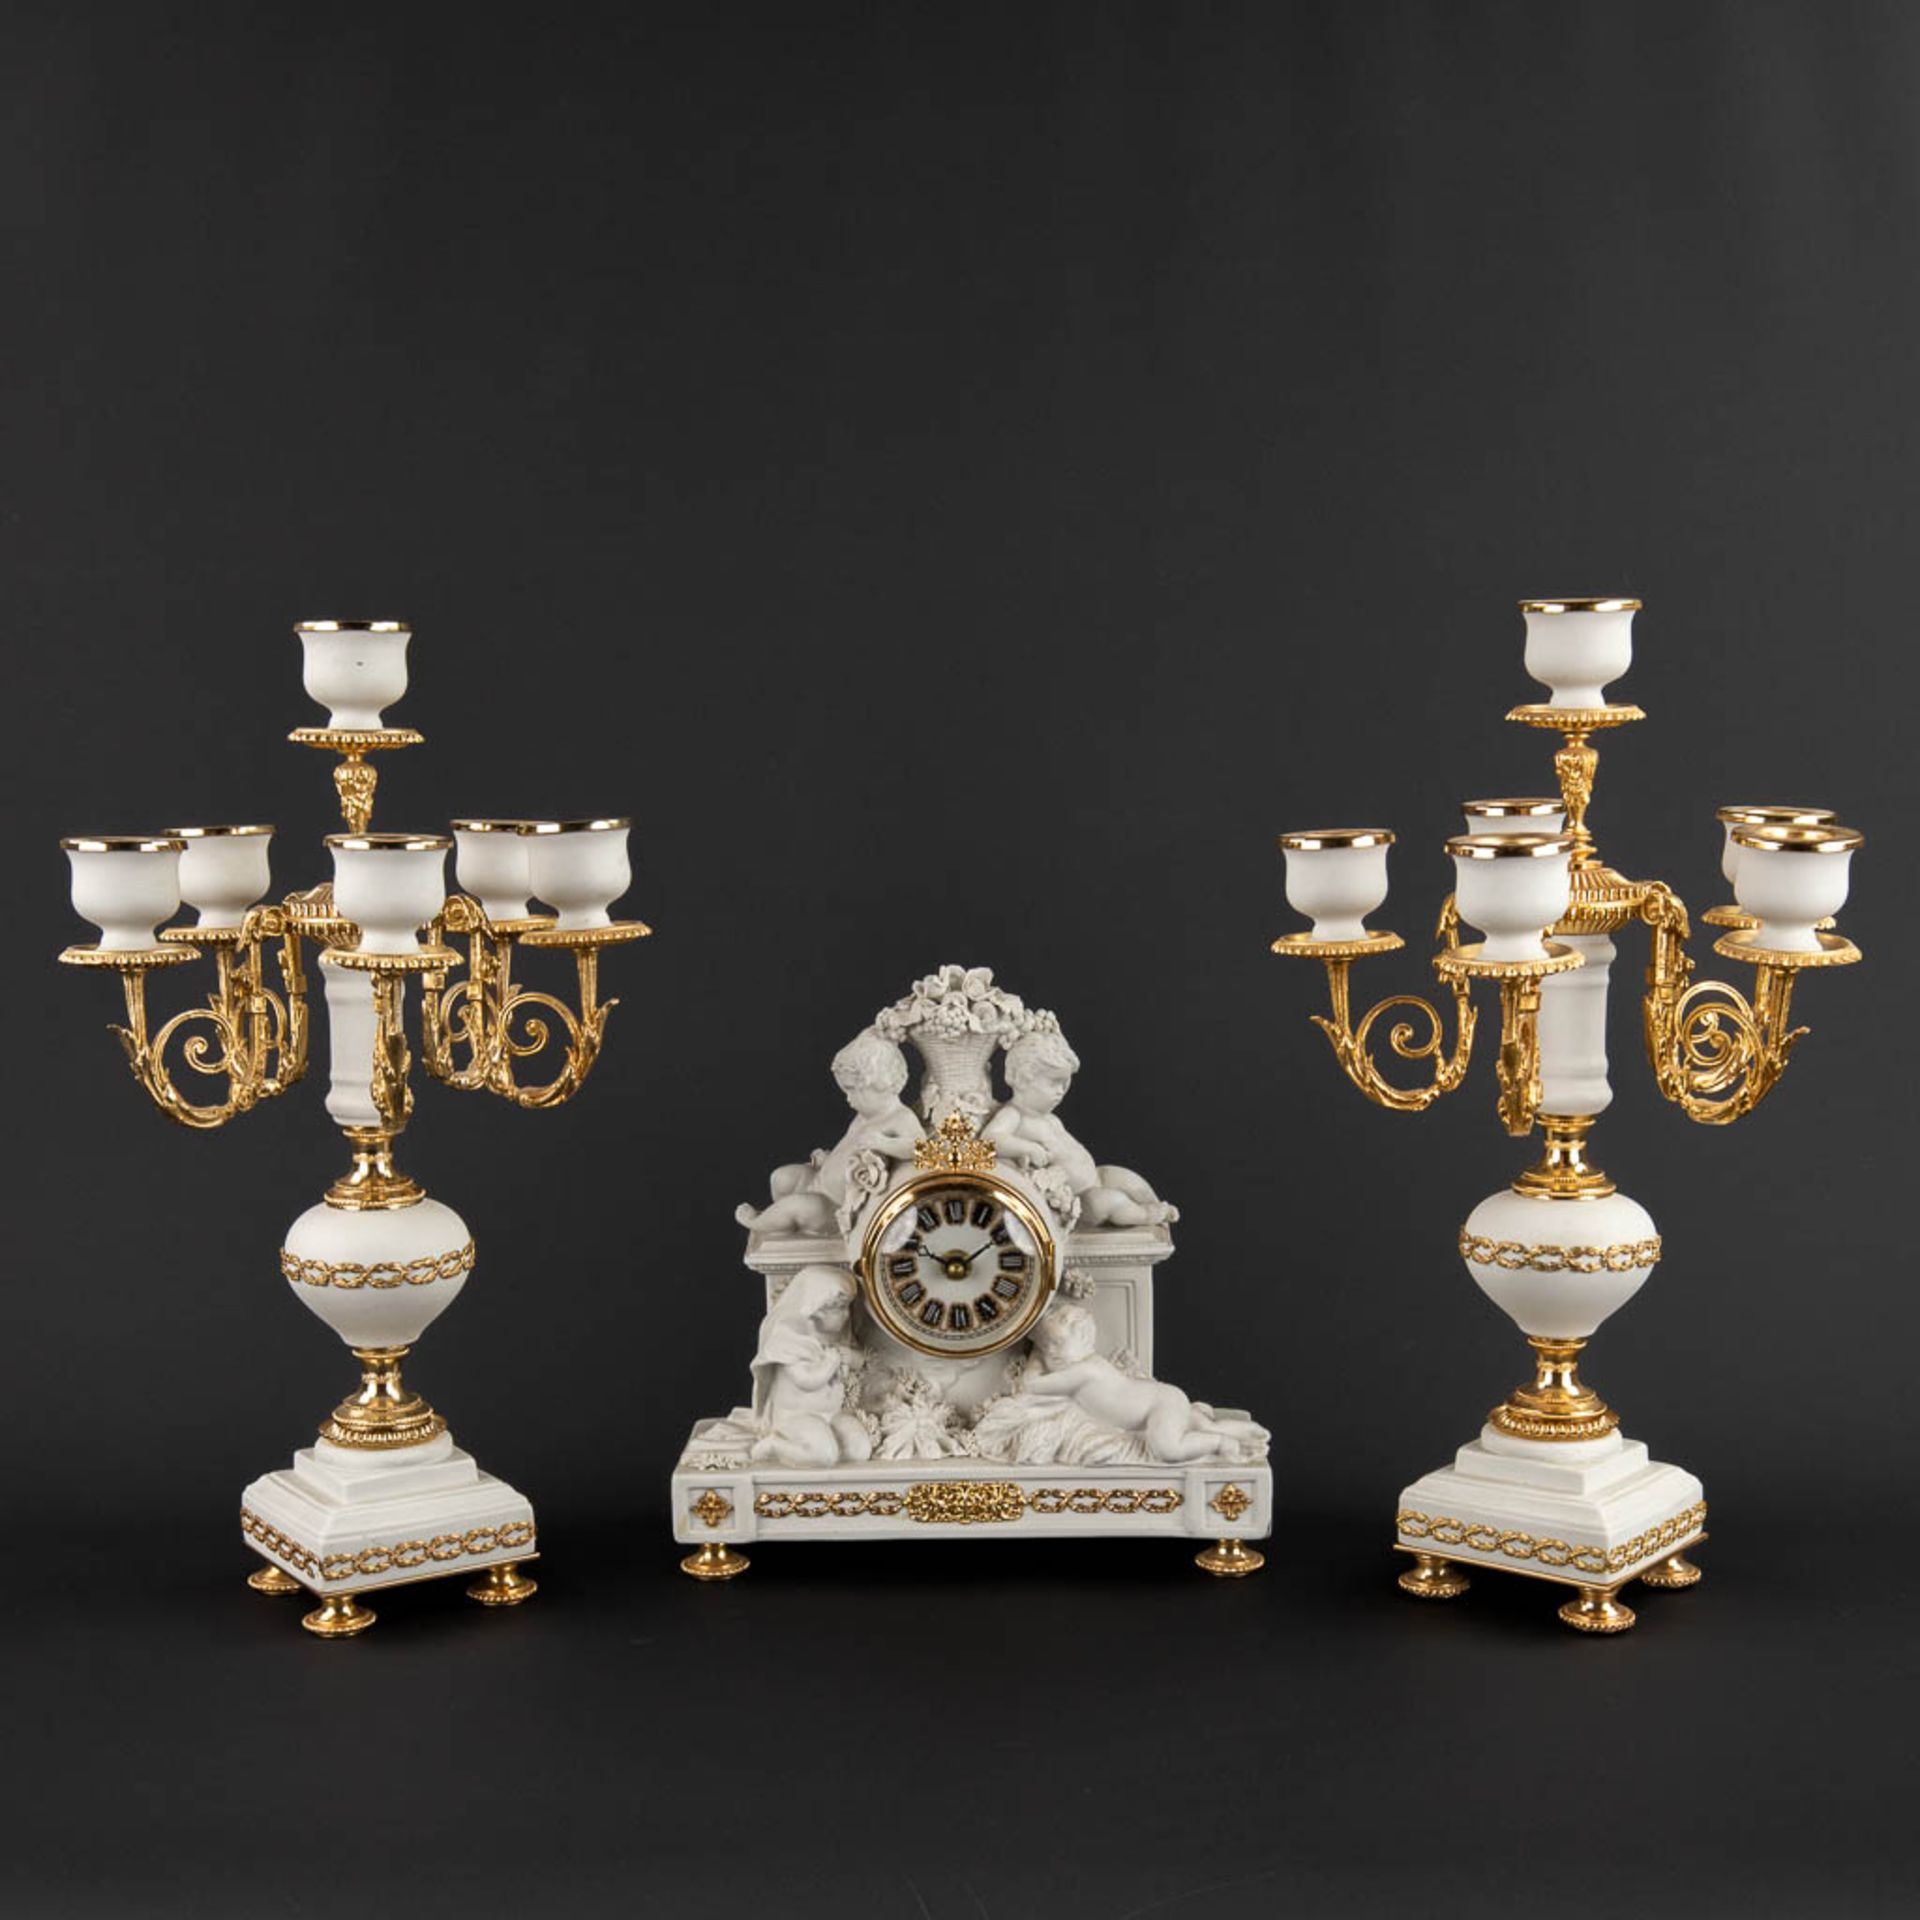 A three piece mantle garniture clock and candelabra, bisque porcelain, 20th C. (D:11 x W:25 x H:26 c